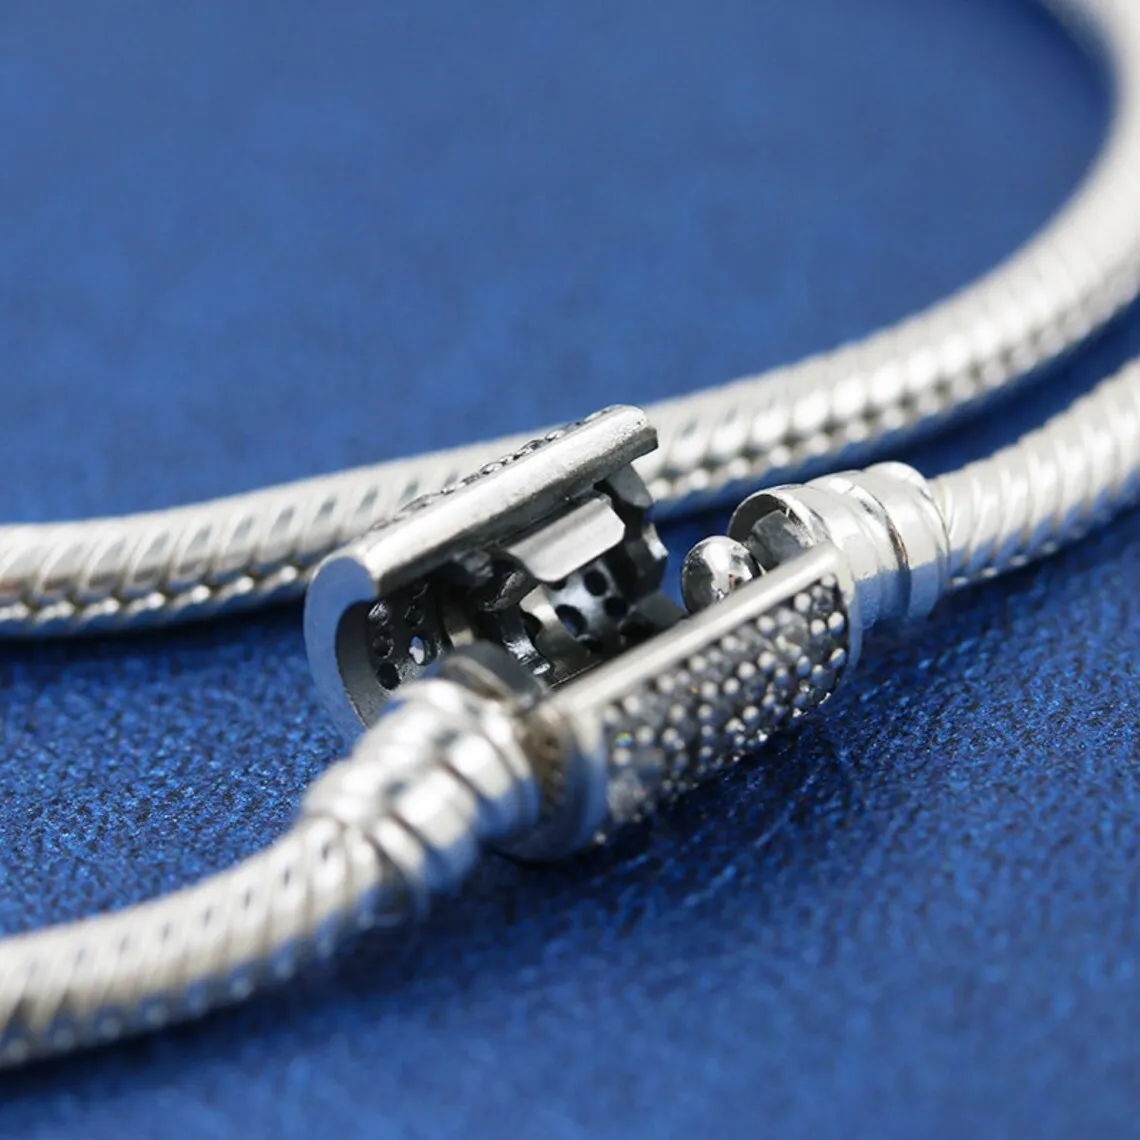 Pandora Moments Double Wrap Barrel Clasp Snake Chain Bracelet/Necklace, Sterling silver